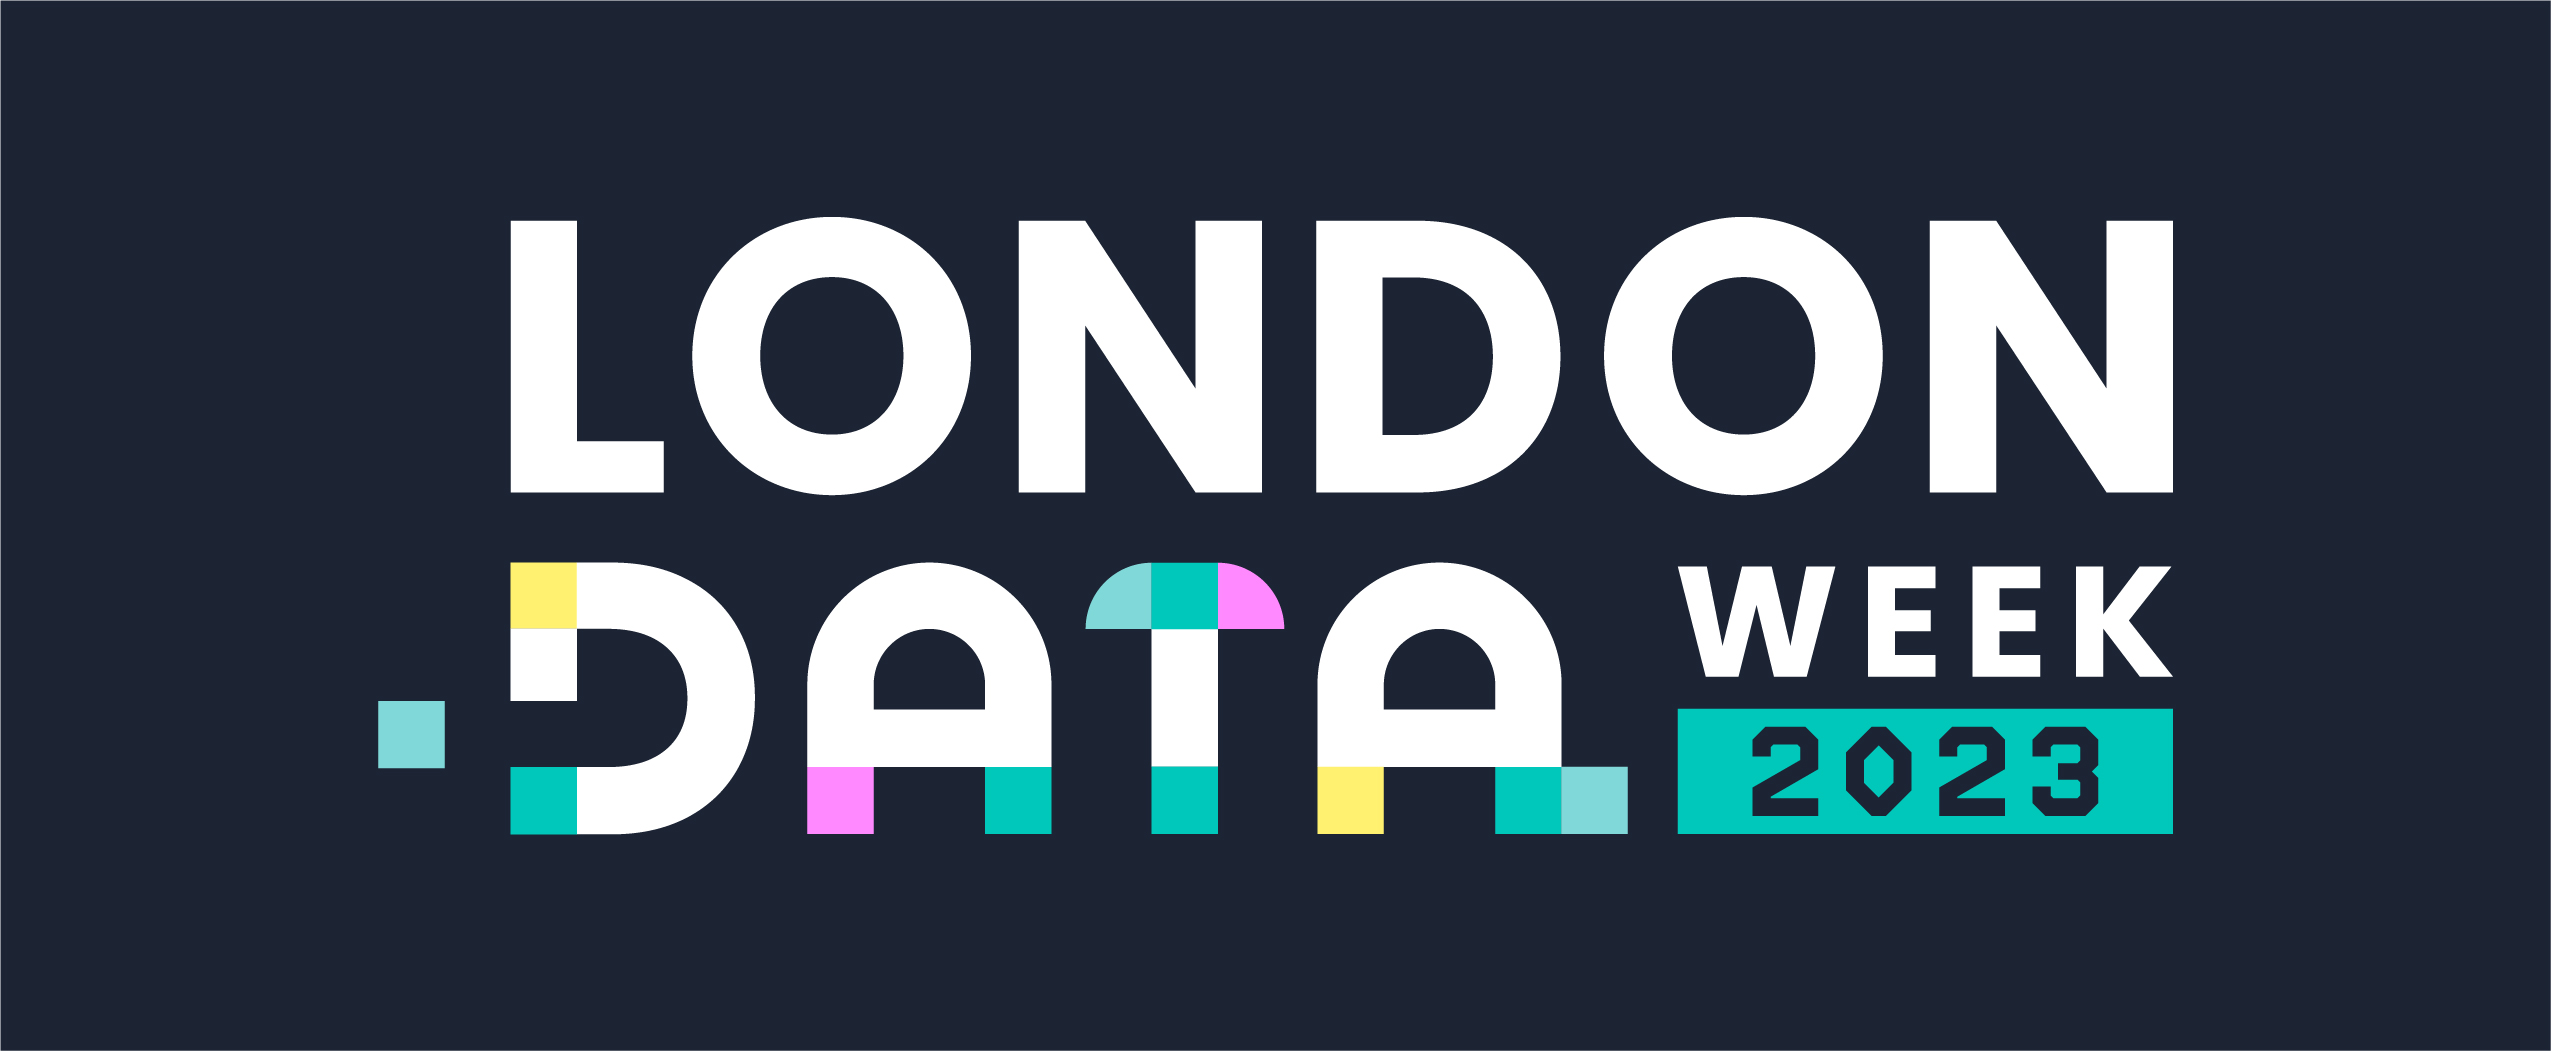 London Data Week 2023